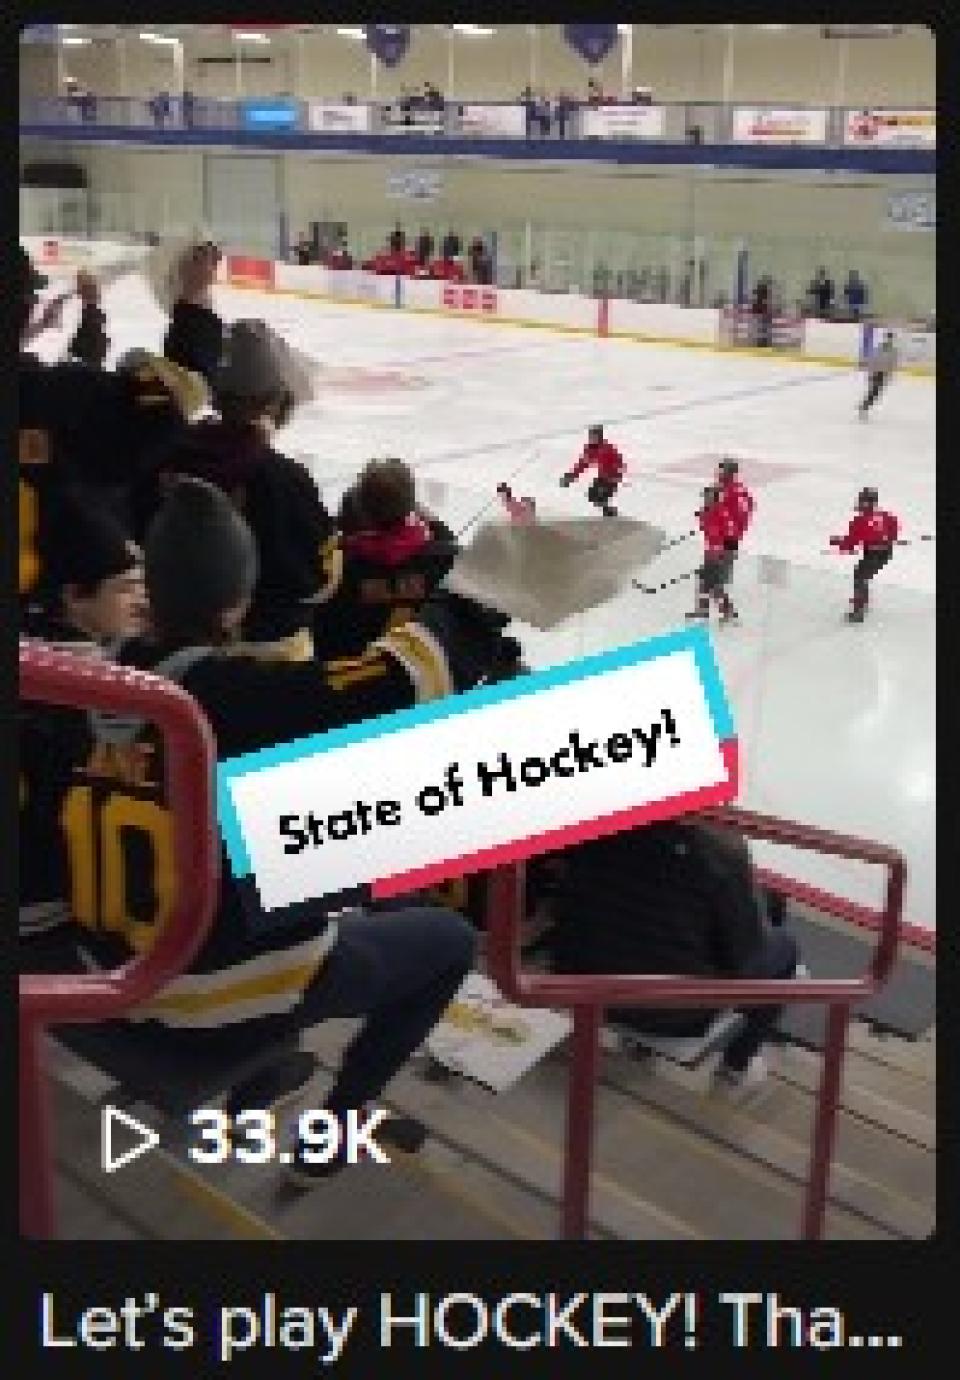 TikTok image of video from MN Youth Hockey Spotlight game.